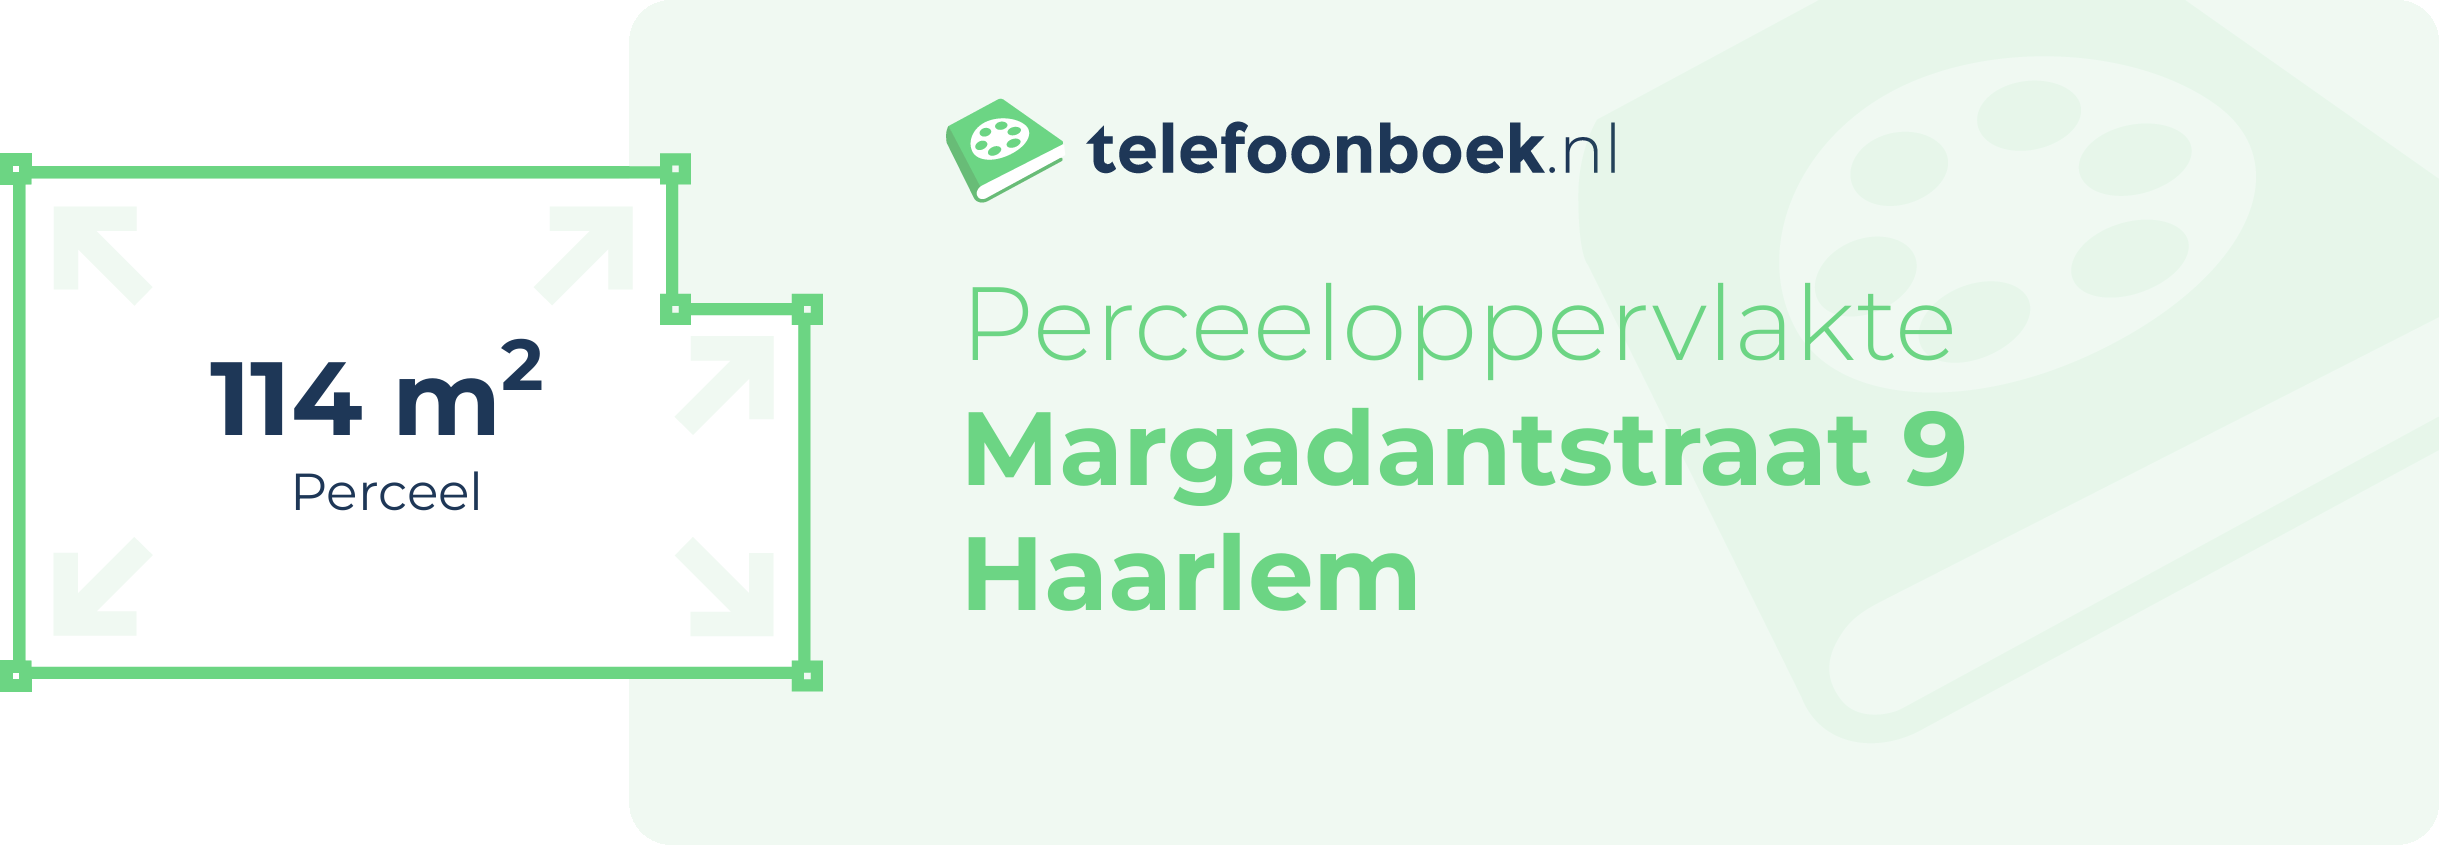 Perceeloppervlakte Margadantstraat 9 Haarlem